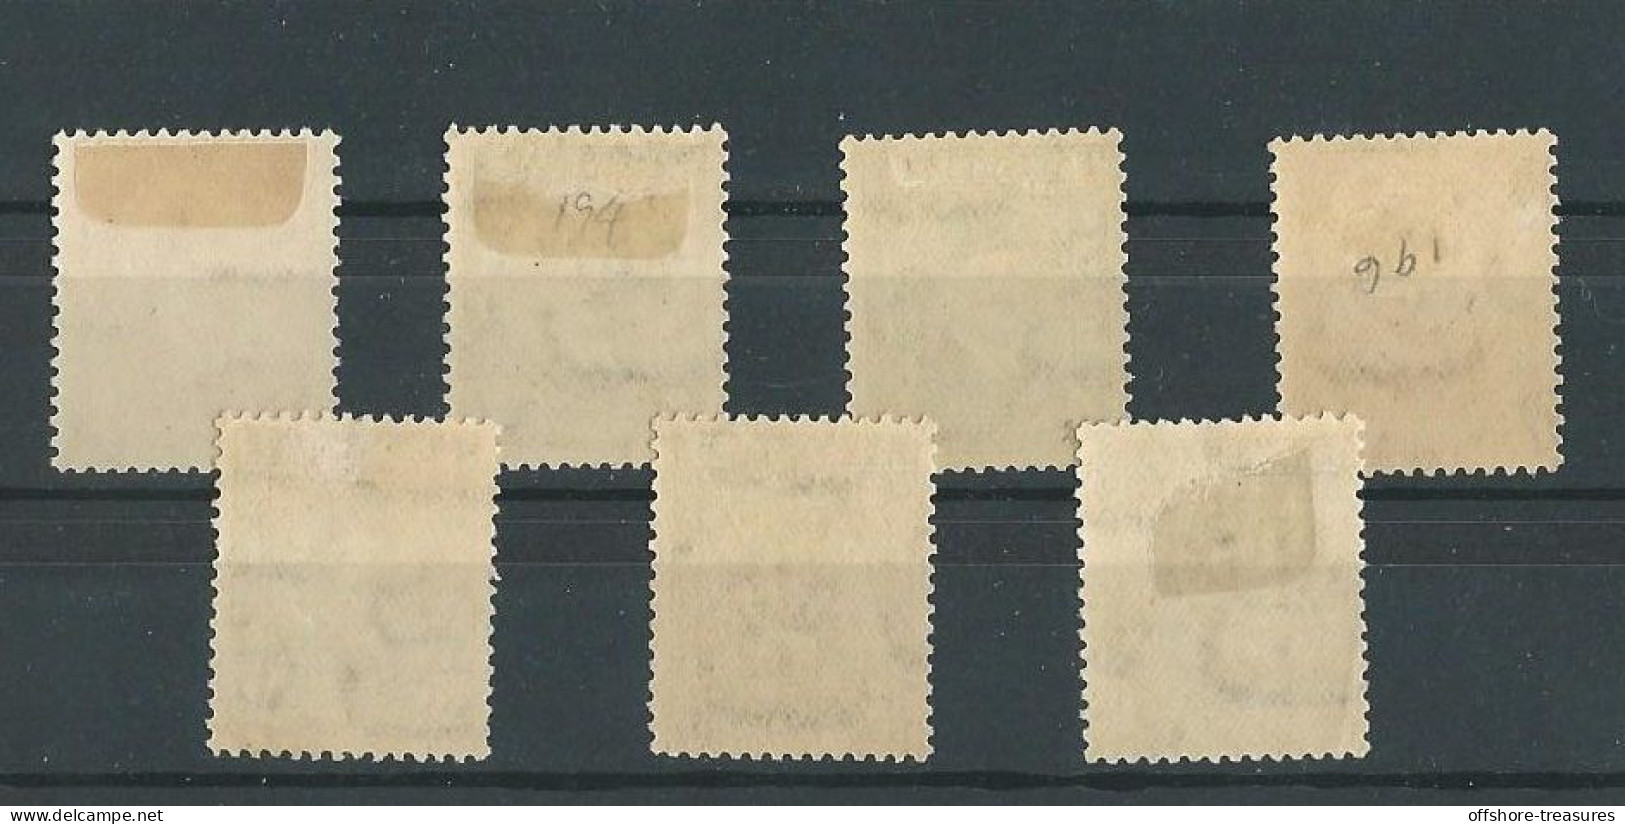 EGYPT POSTAGE STAMP SET 1936 - 1937 KING FUAD / FOUAD FULL SET POSTES STAMPS SG #233 -239 MH - Unused Stamps